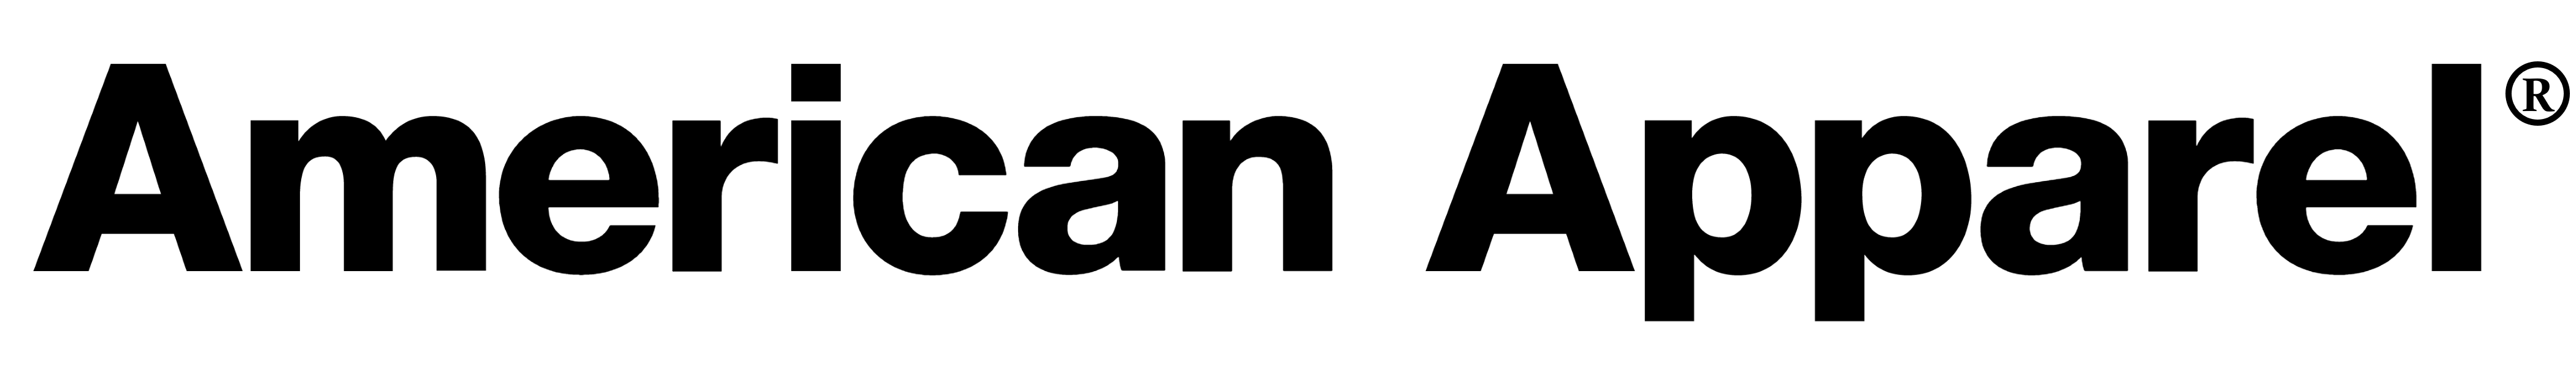 American Apparel logo, logotype